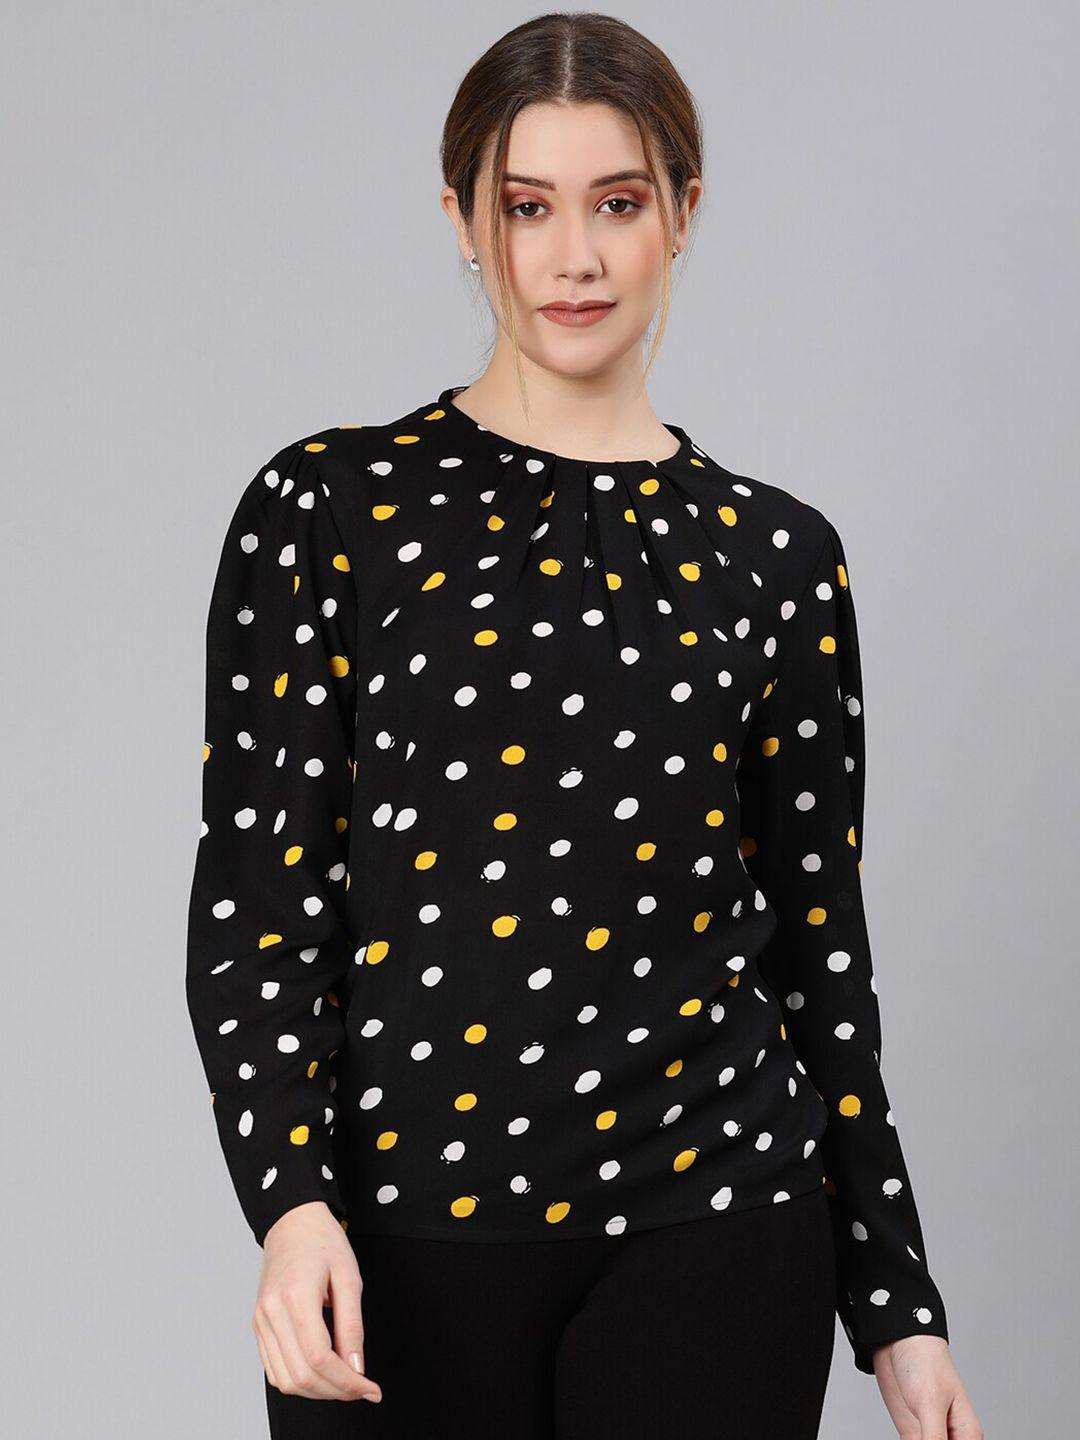 oxolloxo women black & yellow printed top